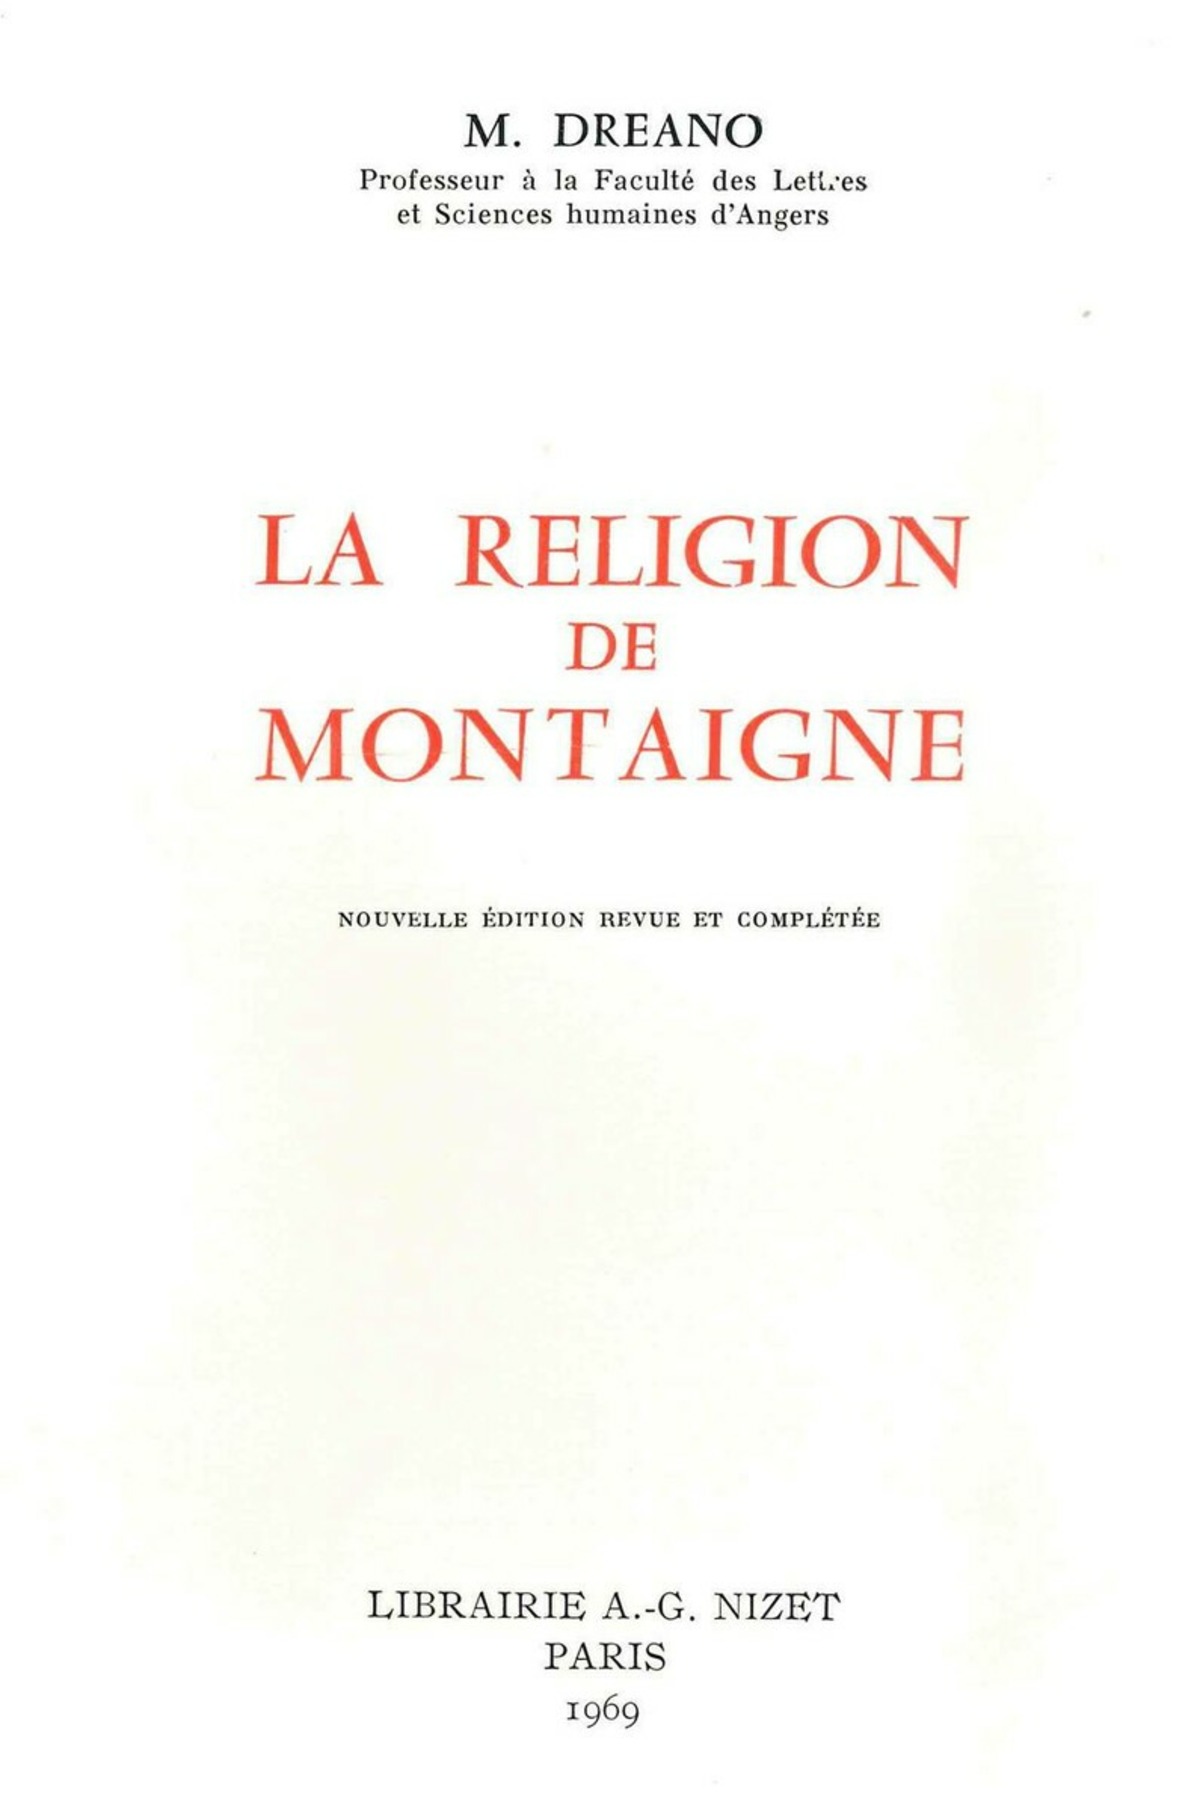 La Religion de Montaigne